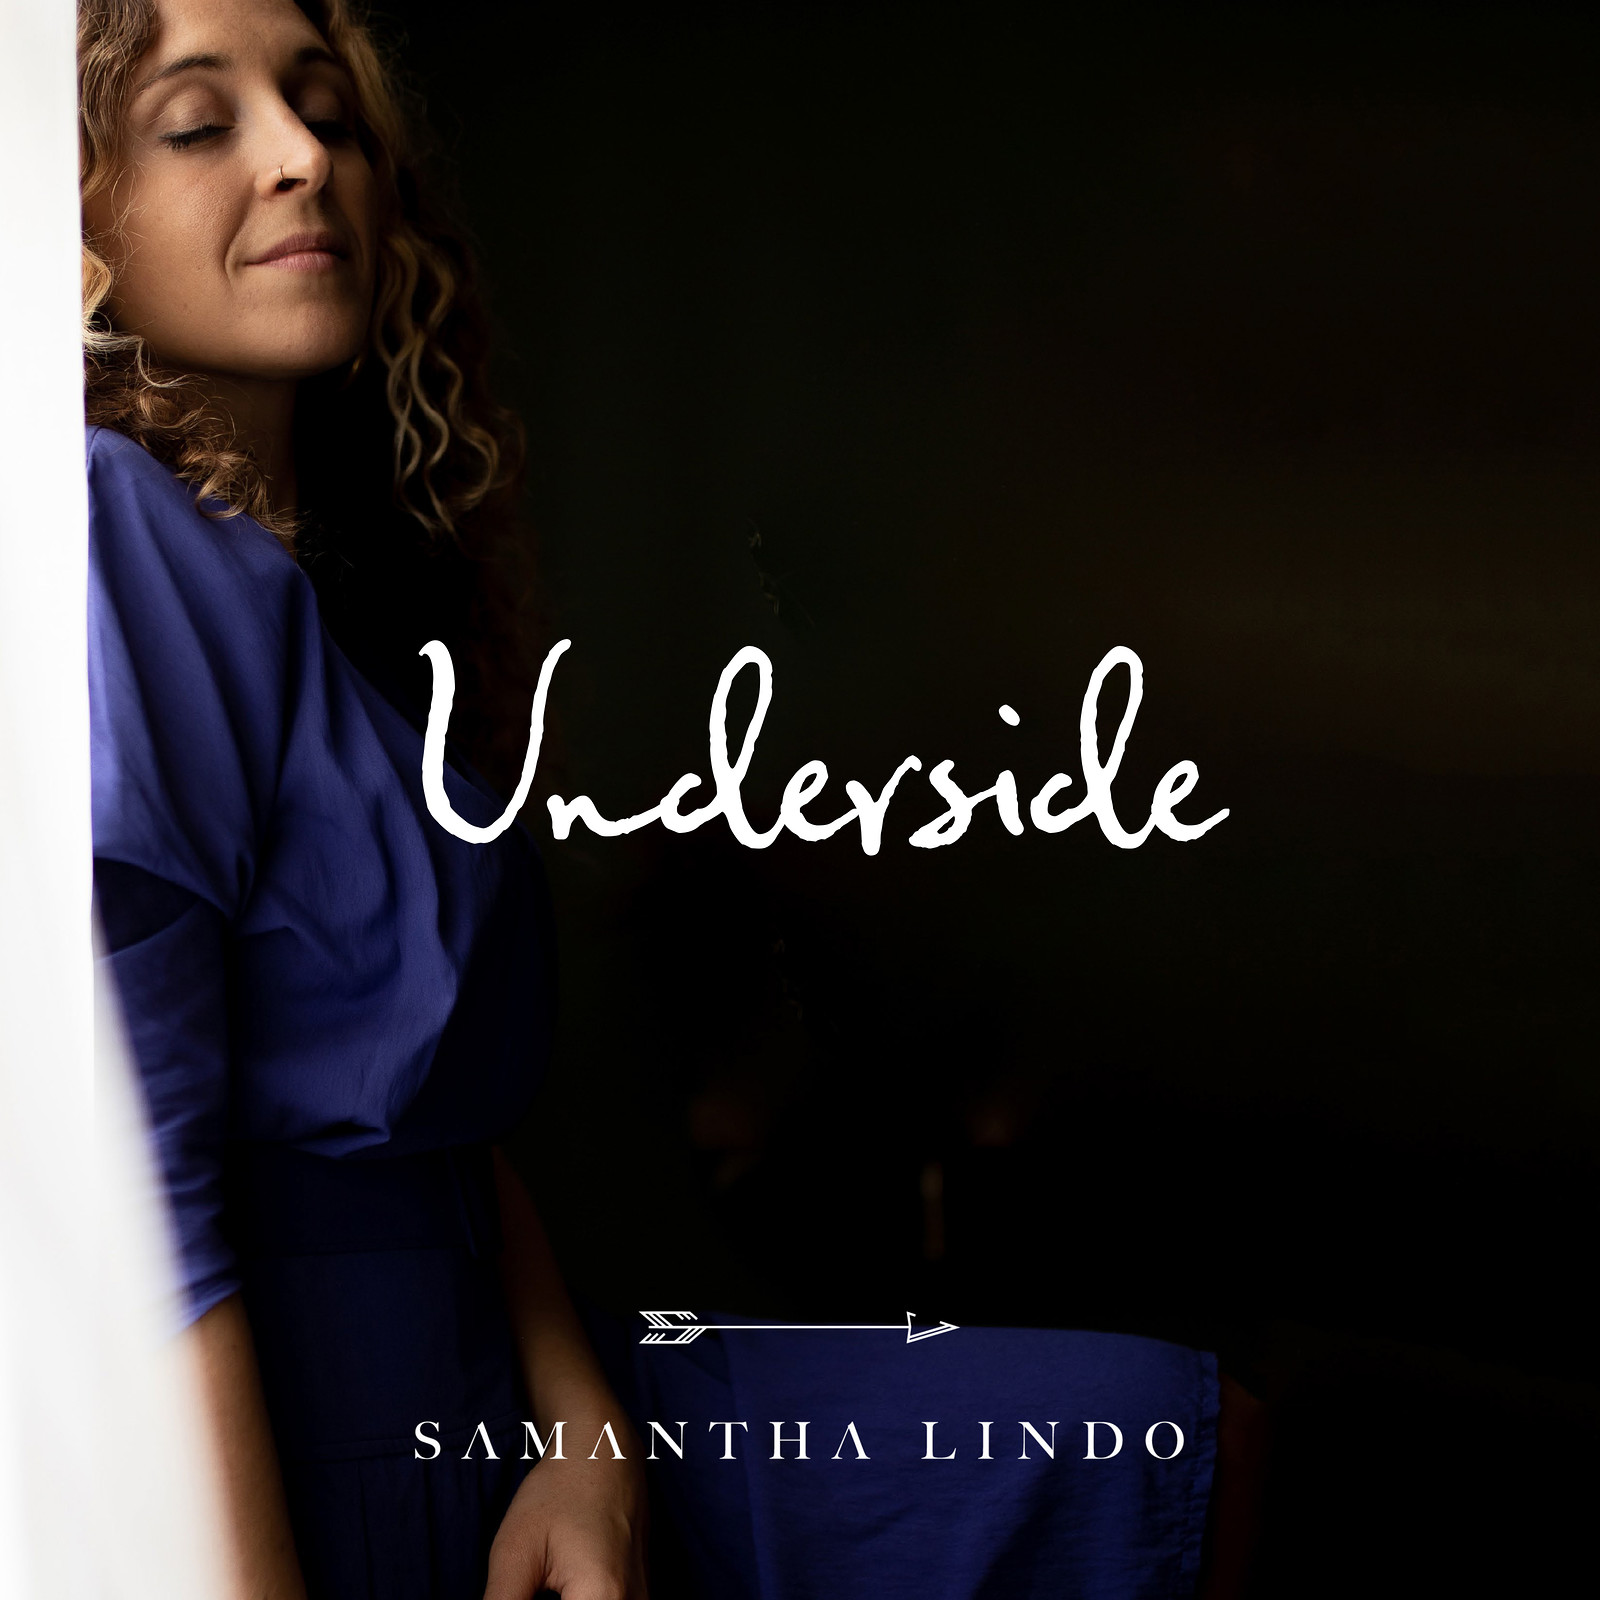 Samantha Lindo // ‘Underside’ Single Launch at Rough Trade Bristol